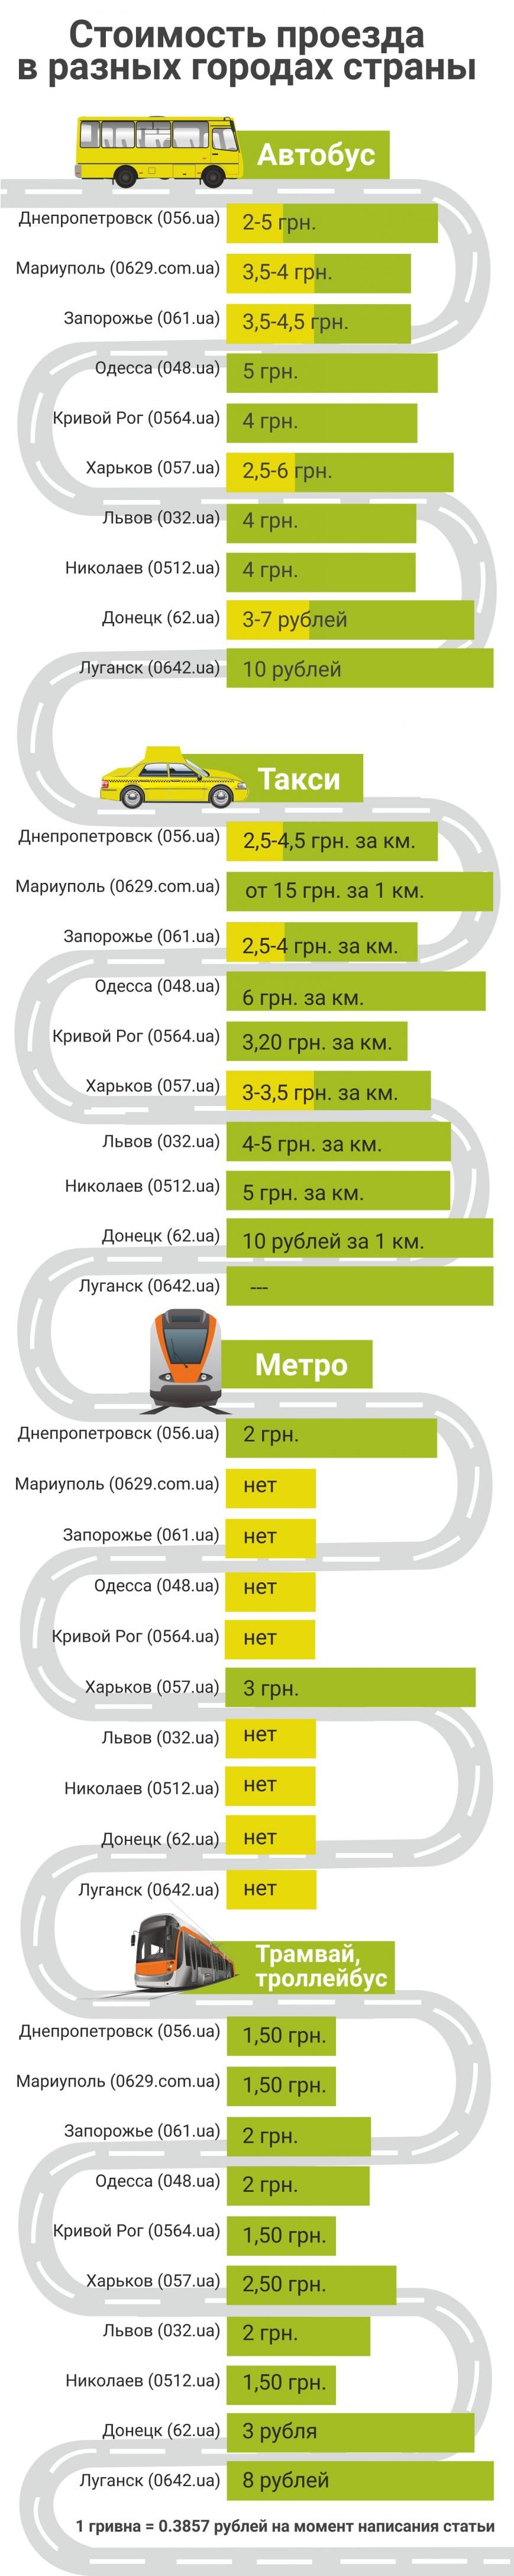 Транспорт инфографика